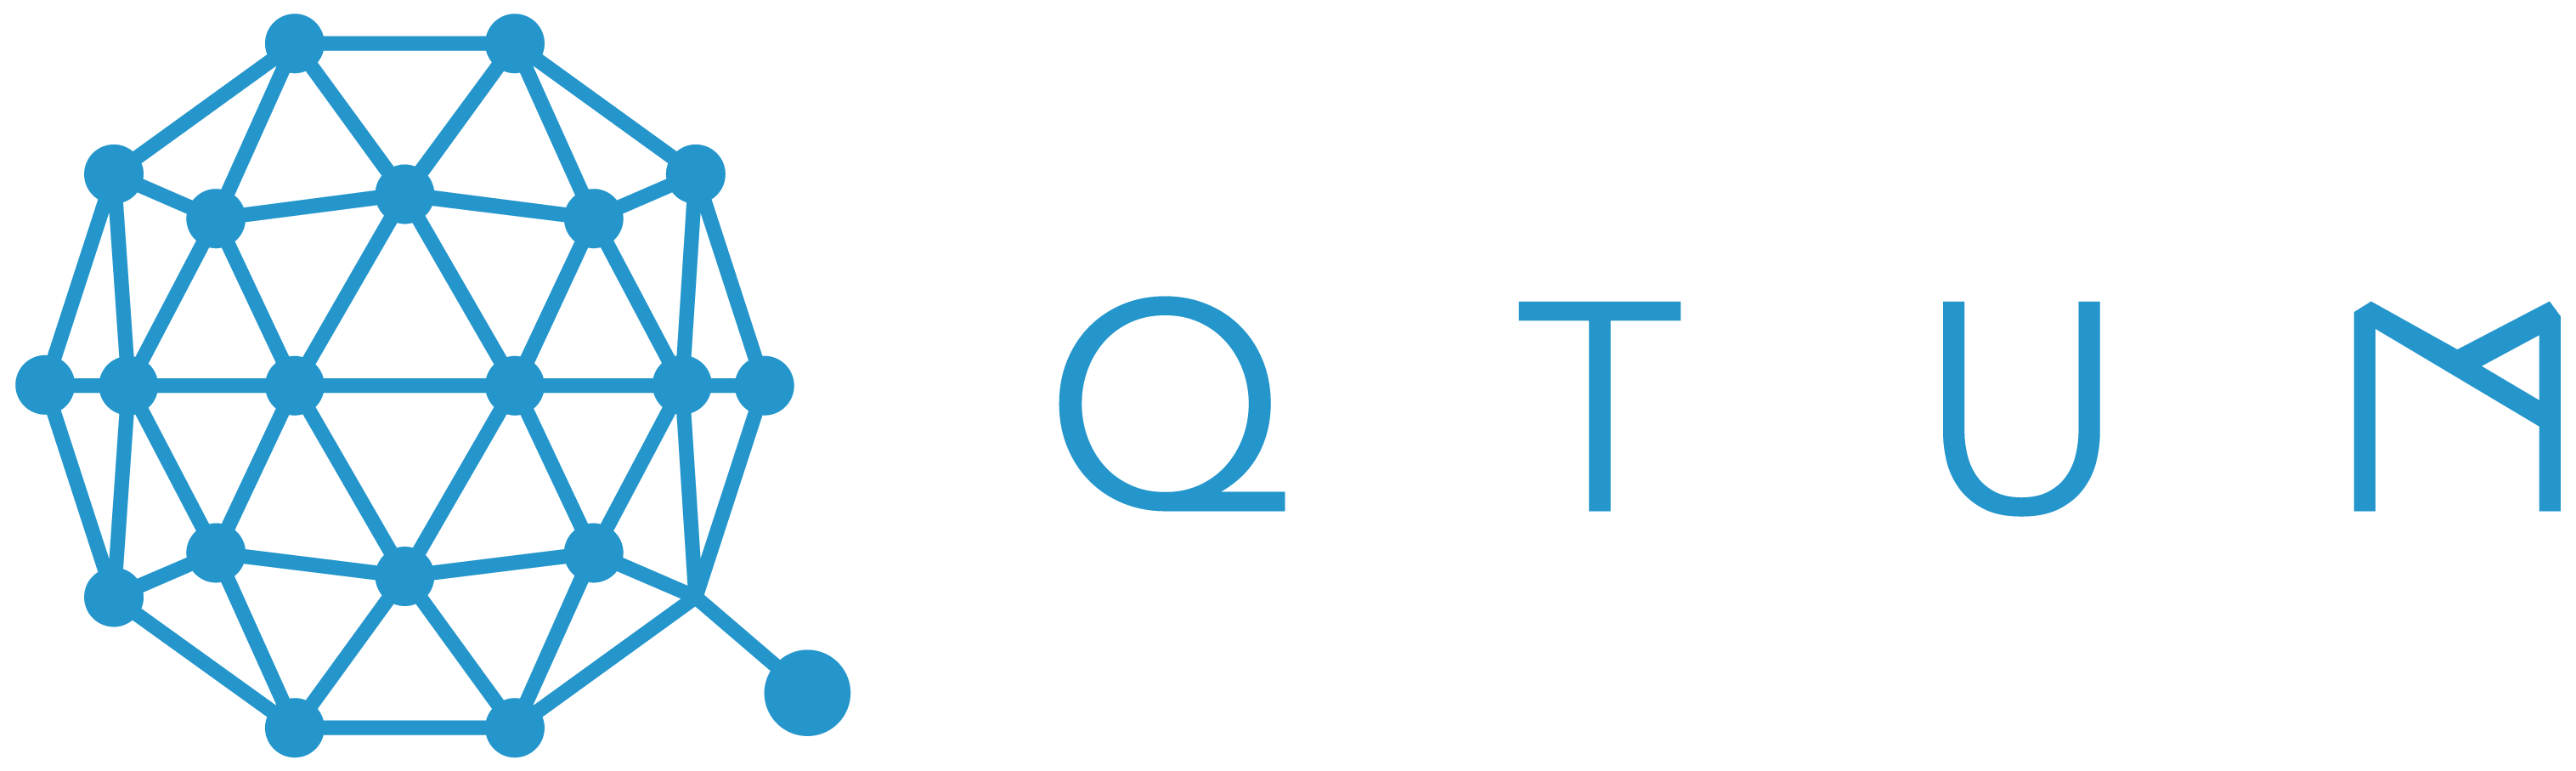 Qtum logo colors